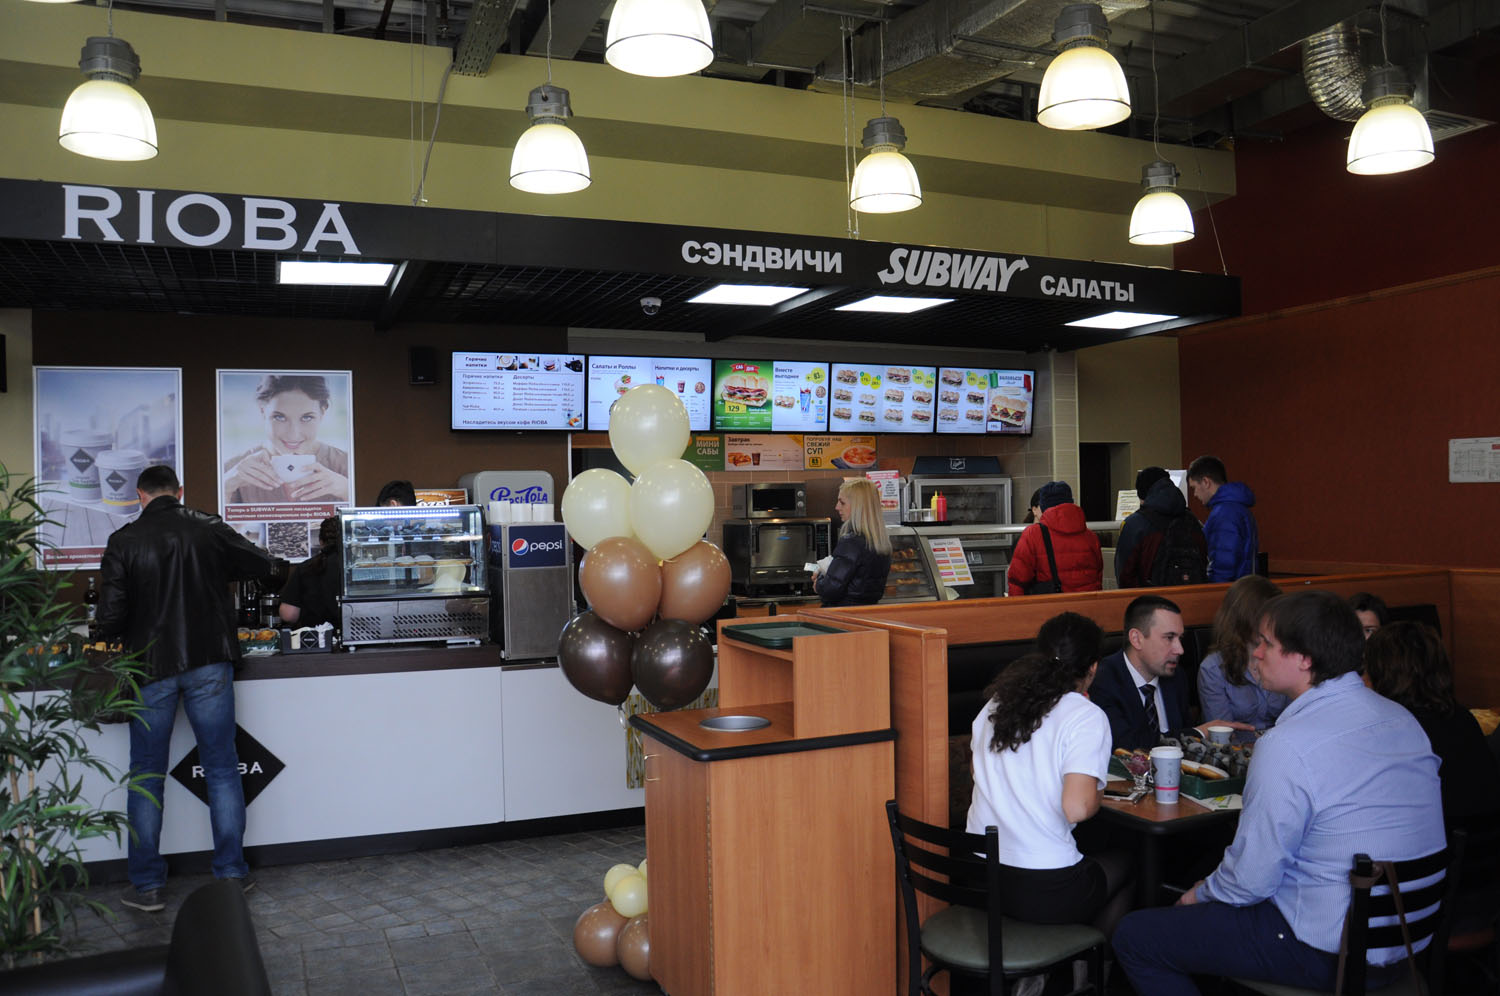  Subway и «Метро» запустили проект ко-брэндинга ресторанов